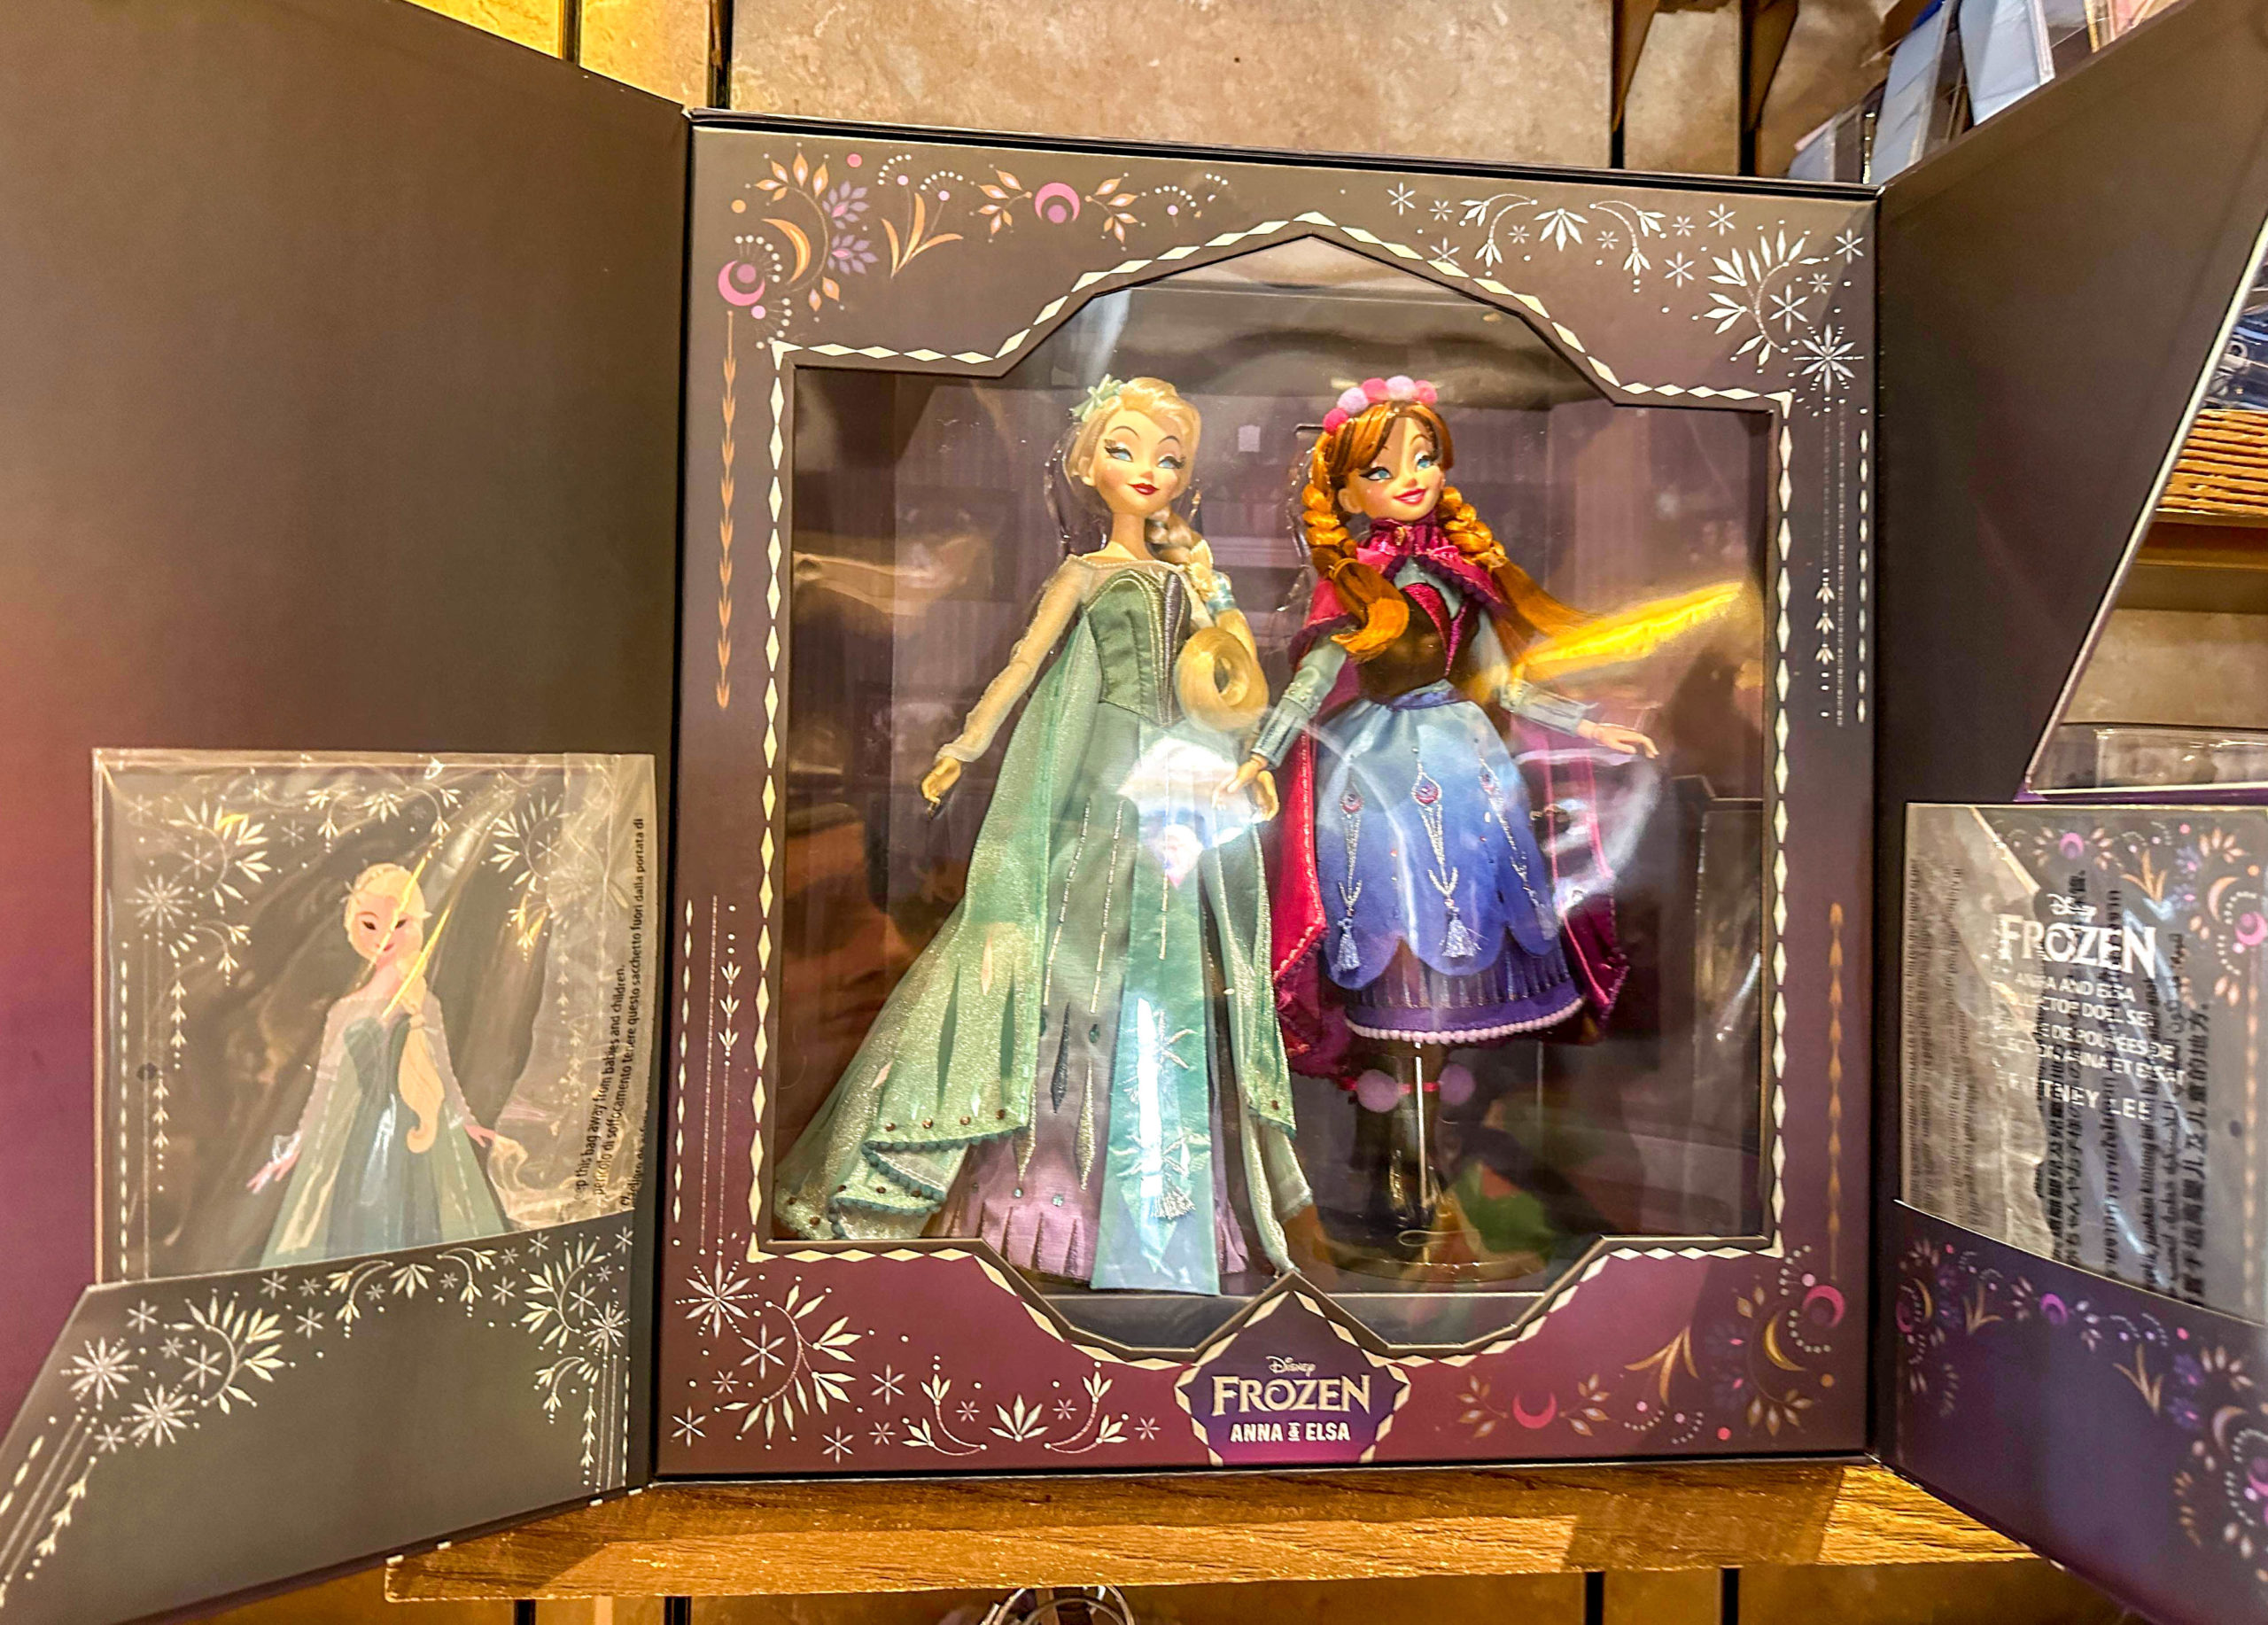 Anna and Elsa dolls